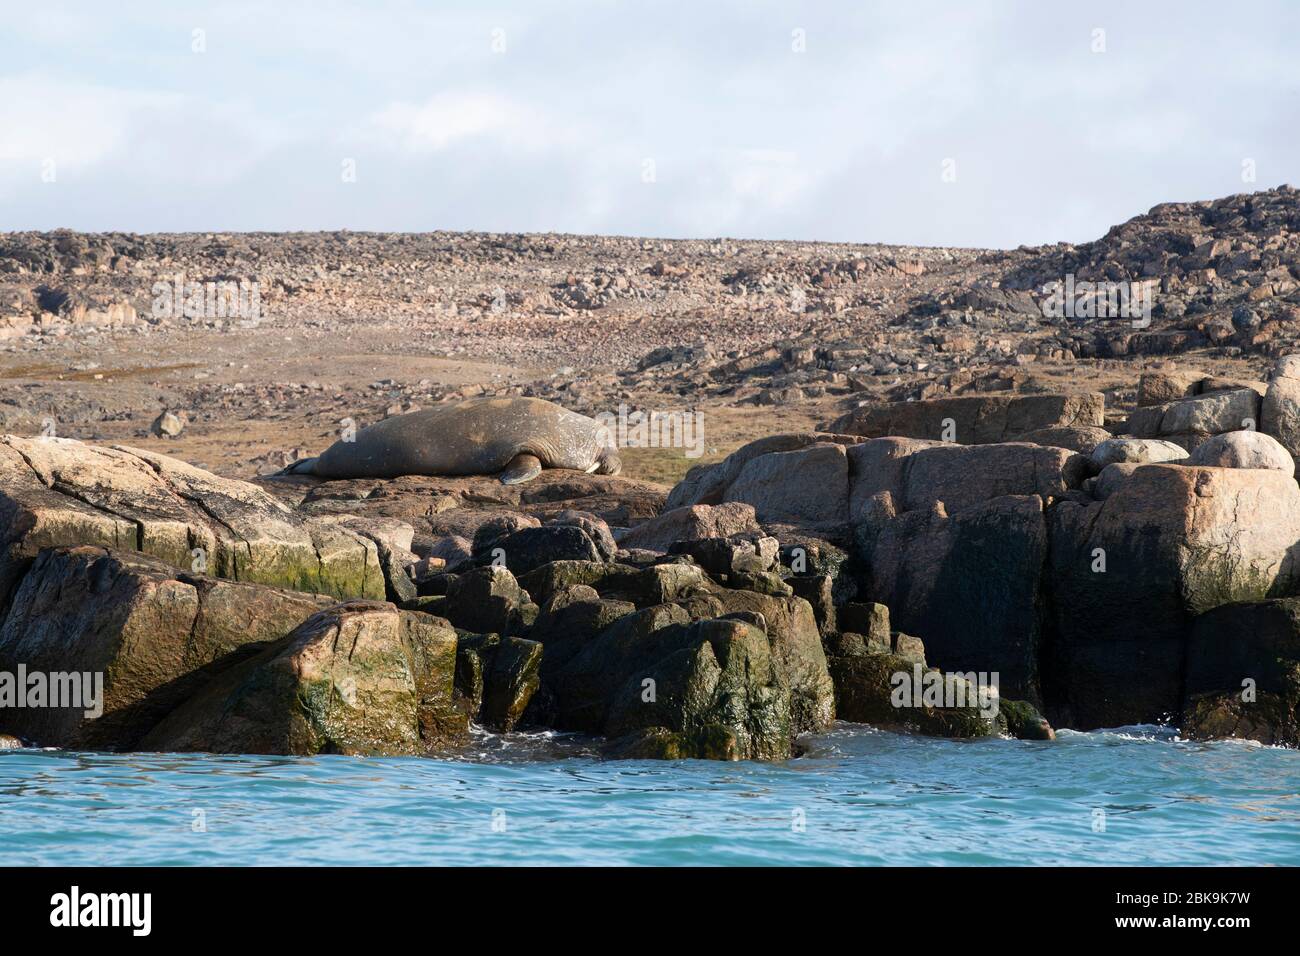 Walrus asleep by rocks on seashore, Canada Stock Photo